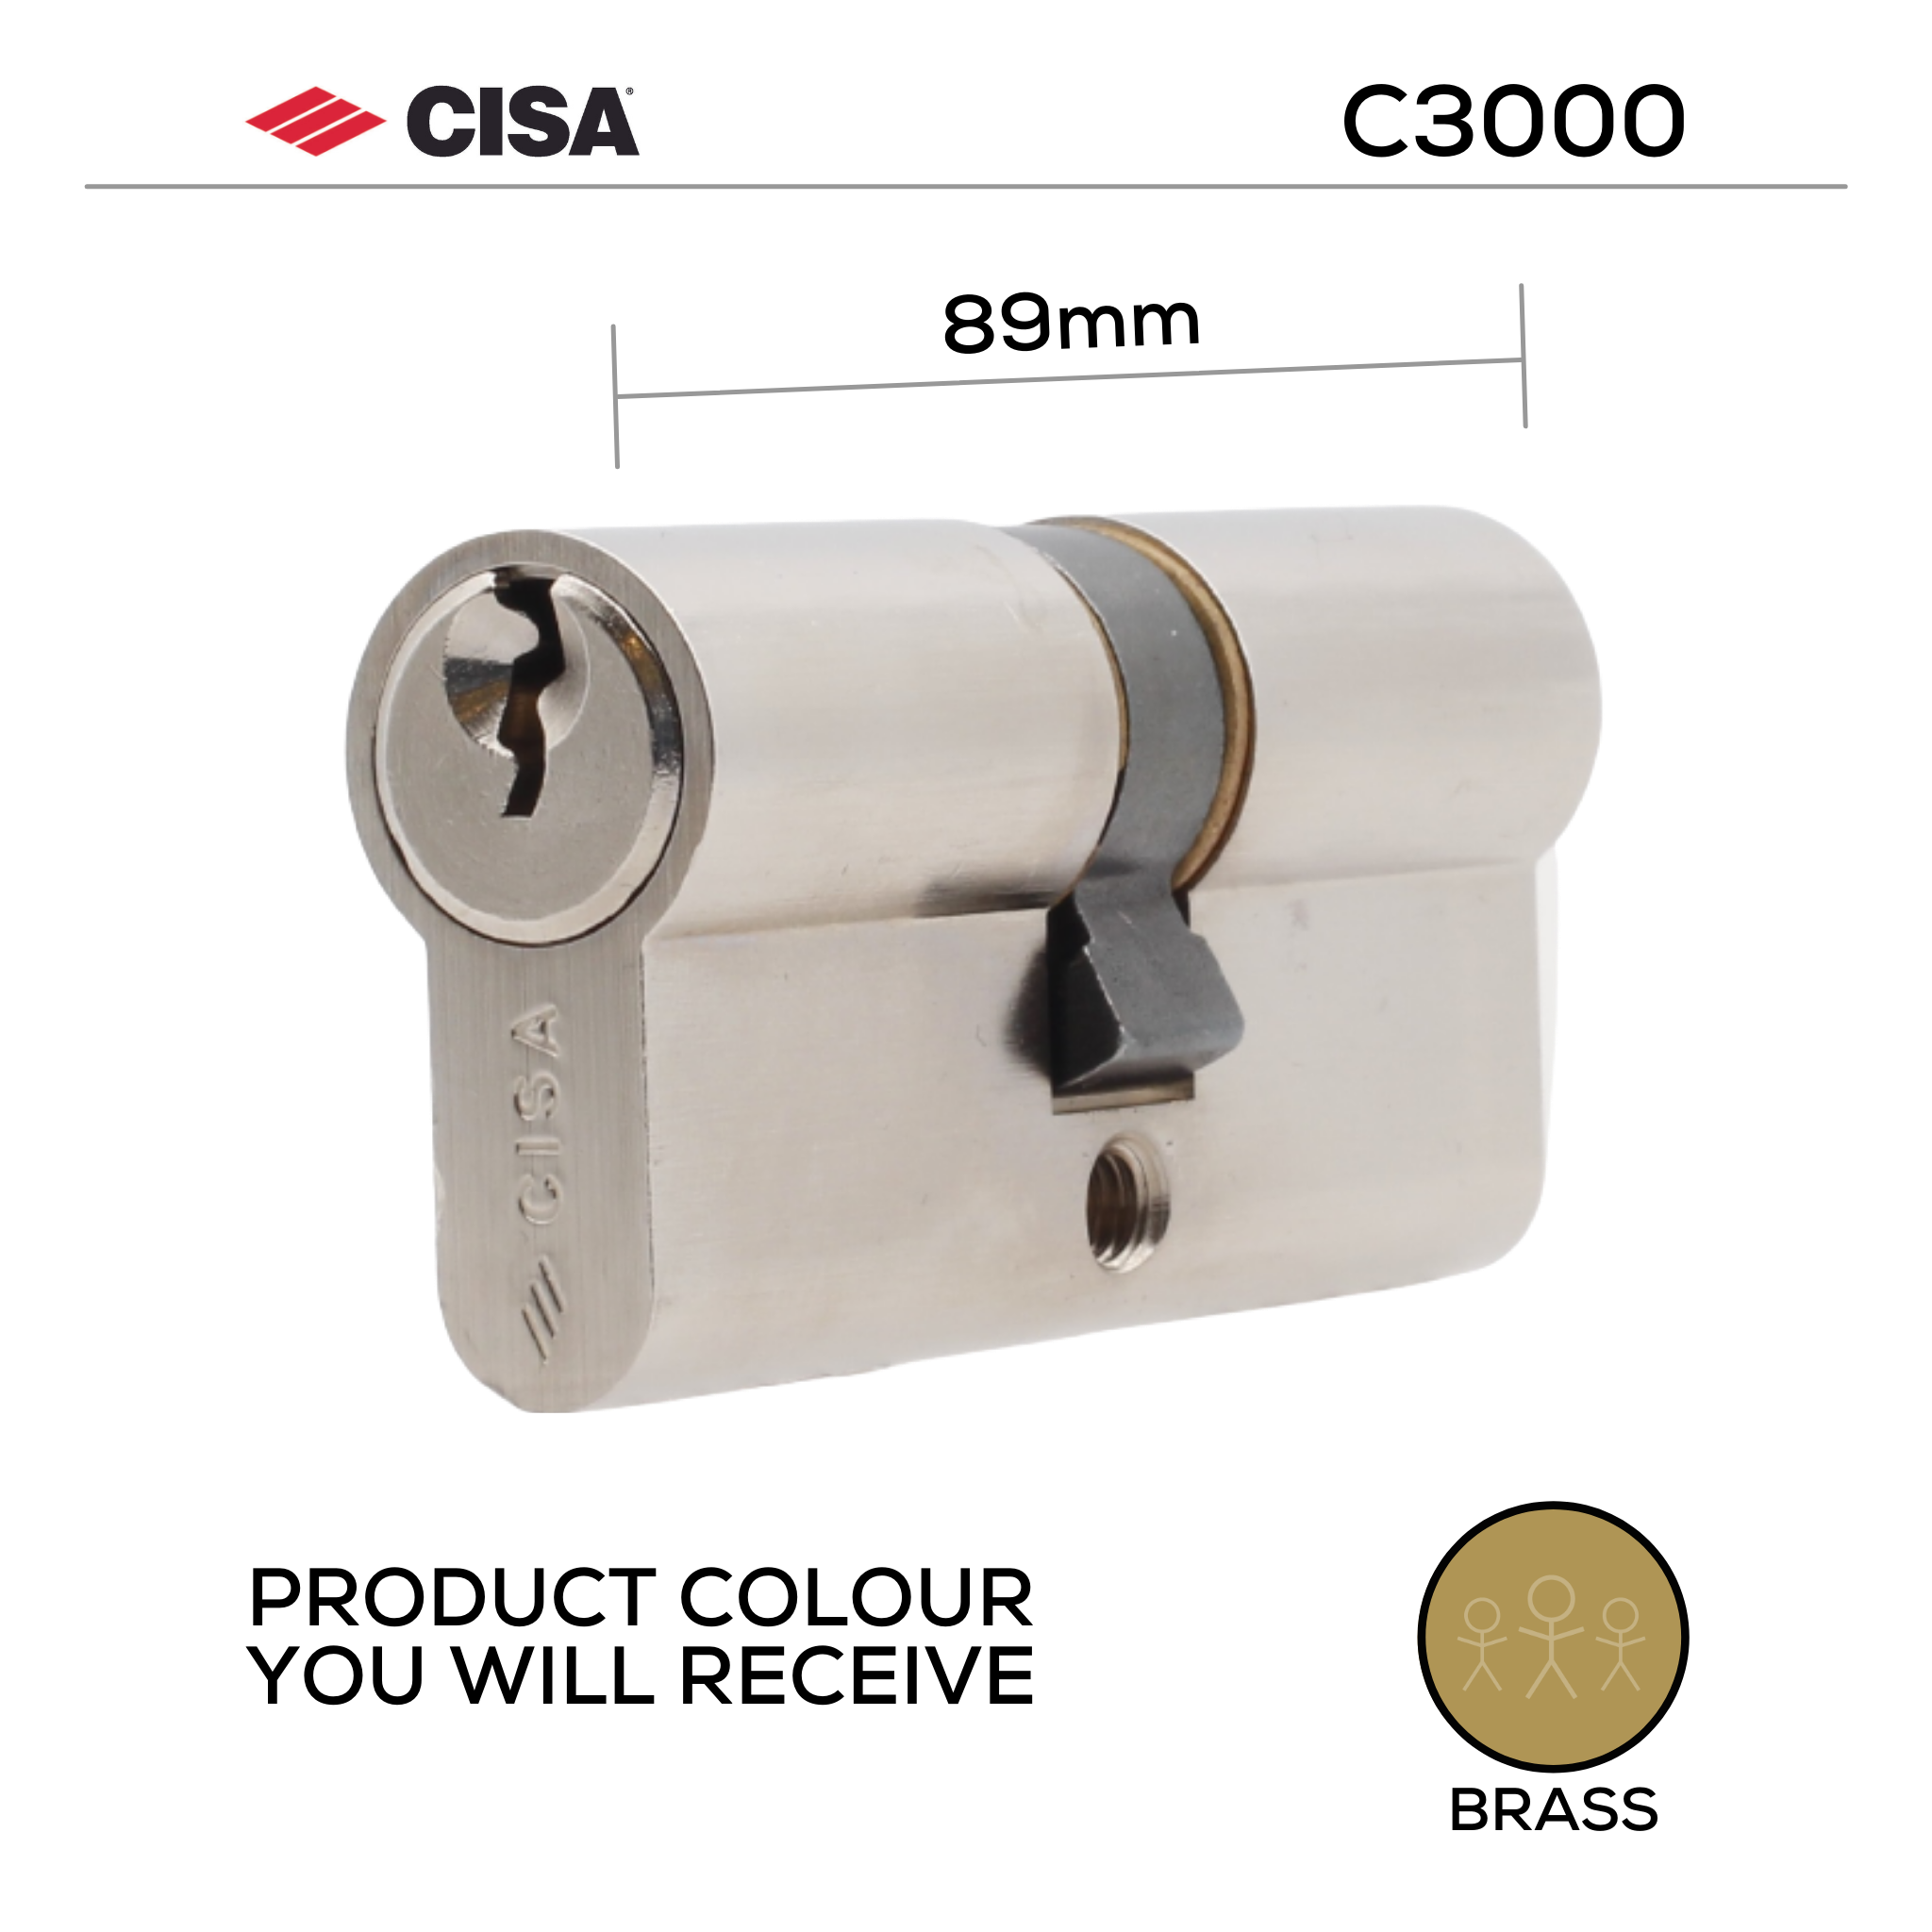 0N310-29-00-KD, 89mm - 44.5/44.5, Double Cylinder, C3000, Key to Key, Keyed to Differ (Standard), 3 Keys, 6 Pin, Brass, CISA